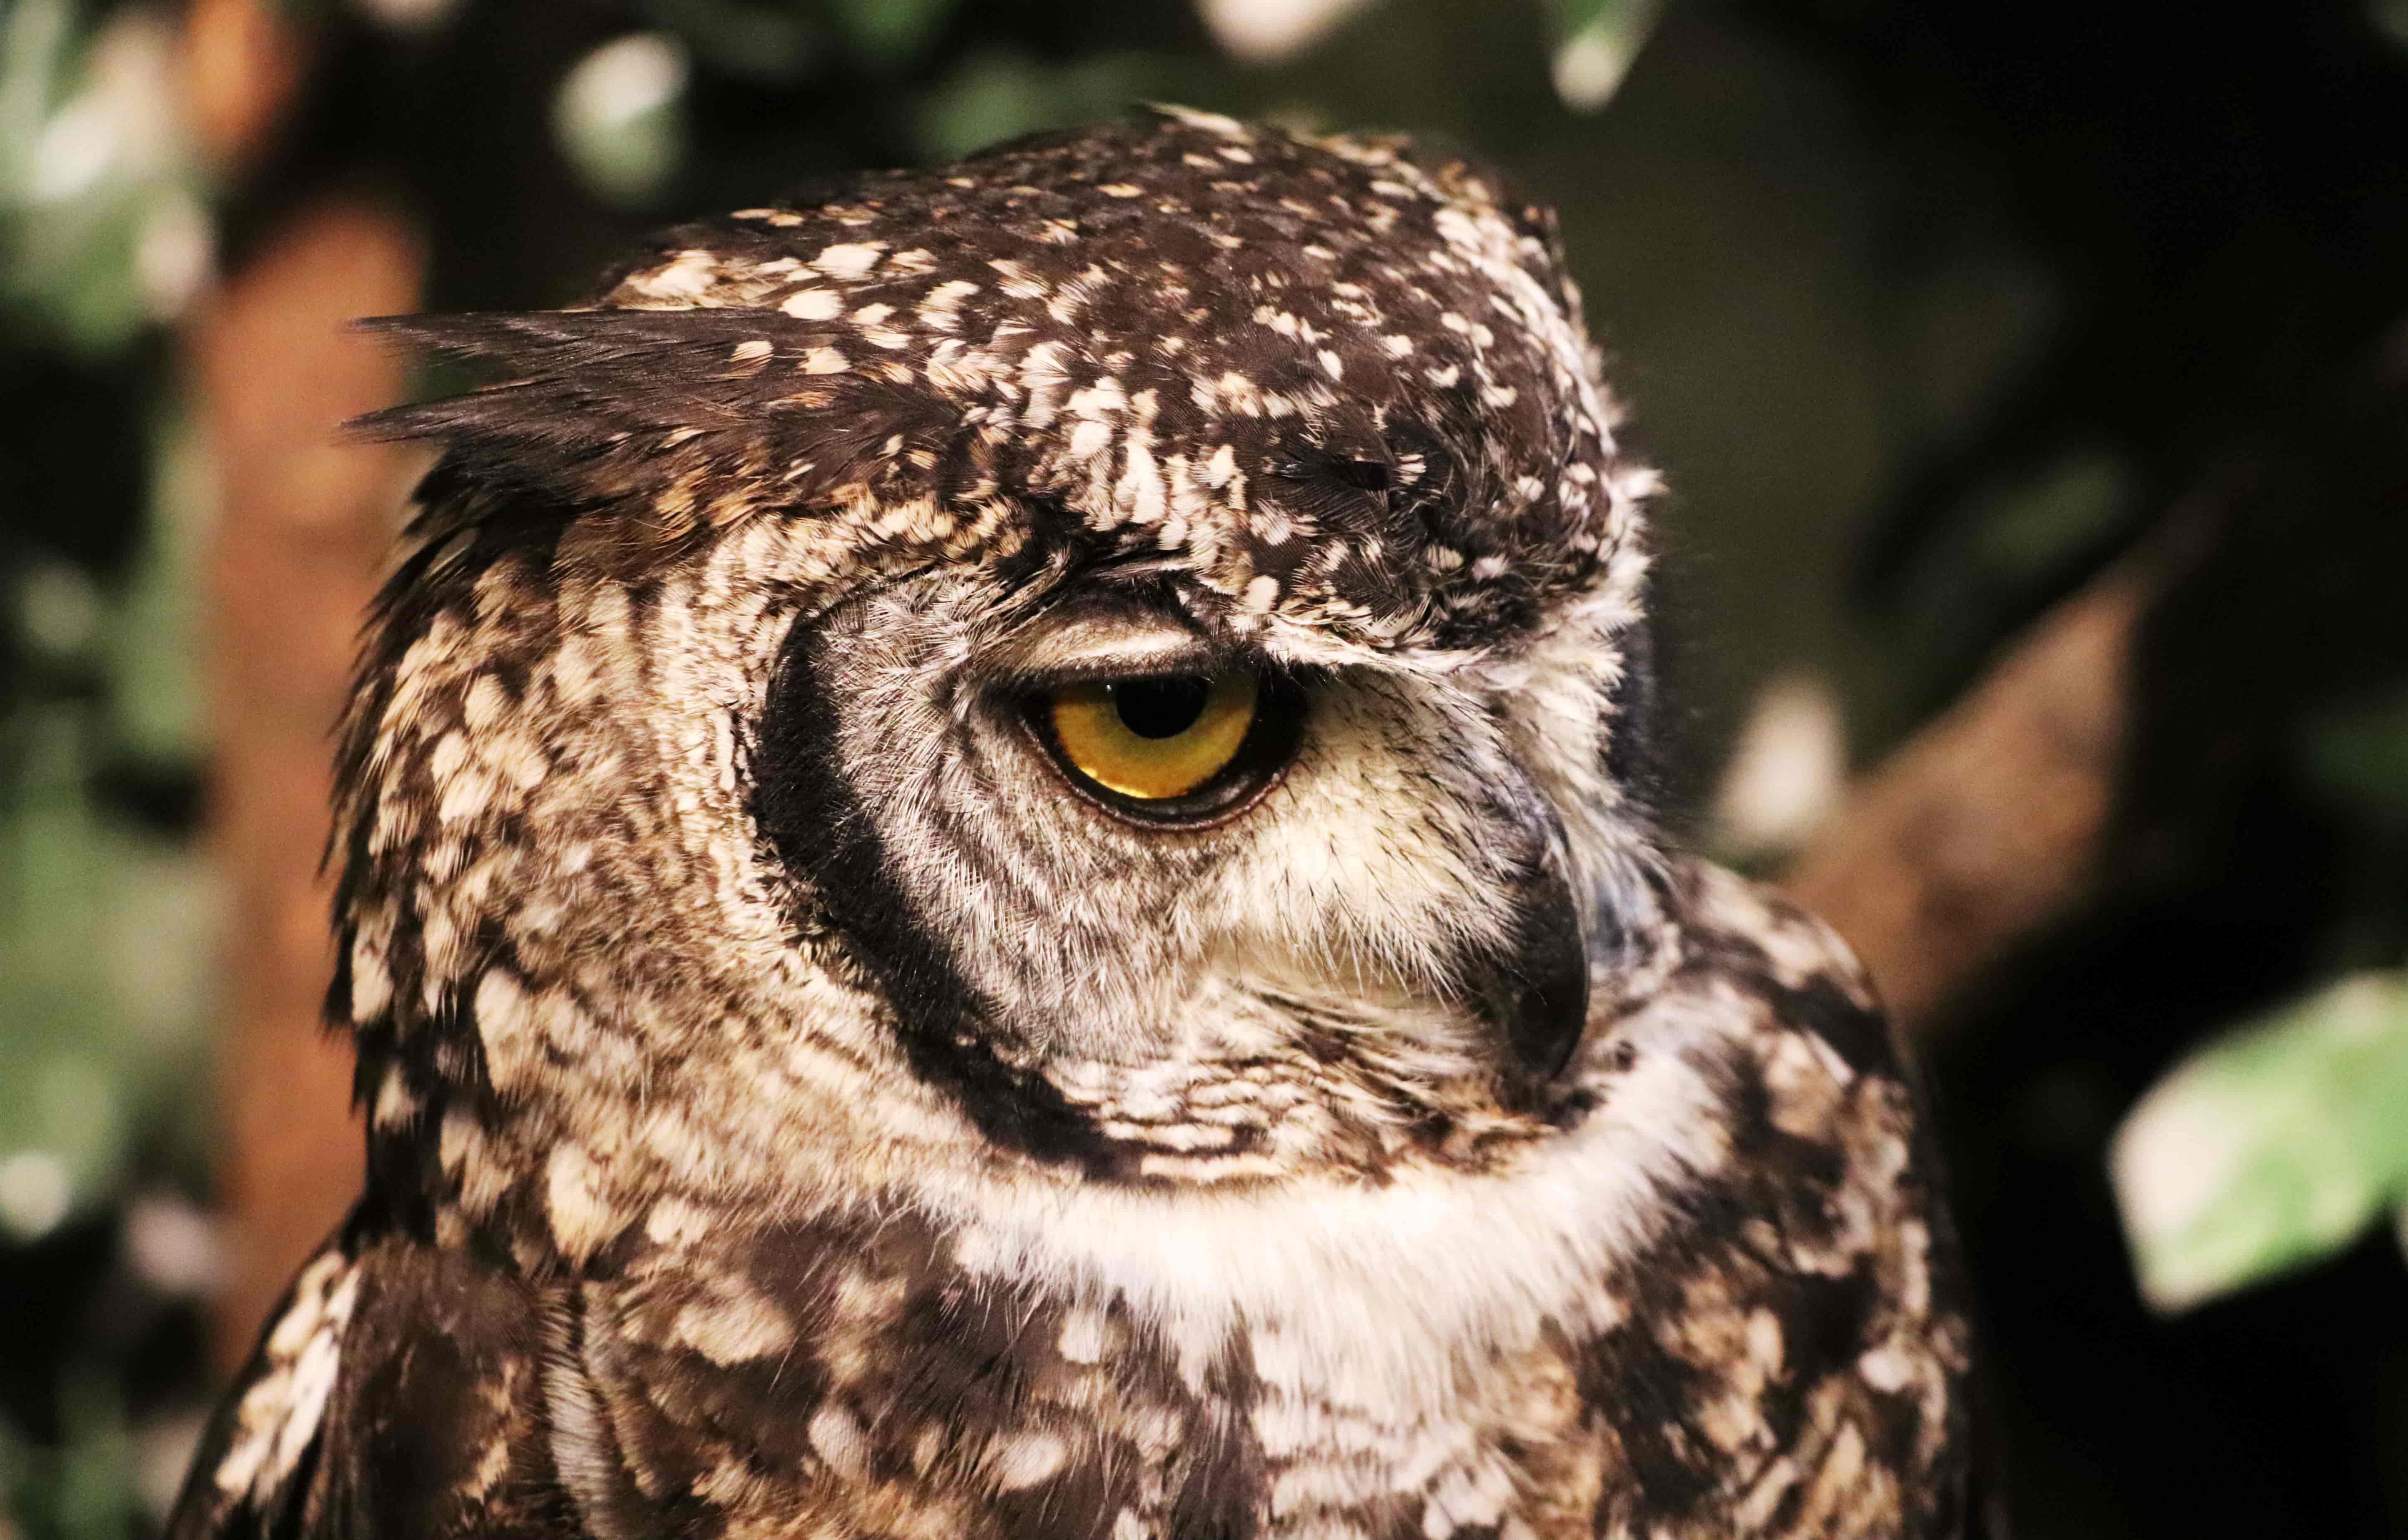 Owl in Japan hatzav aviv photography